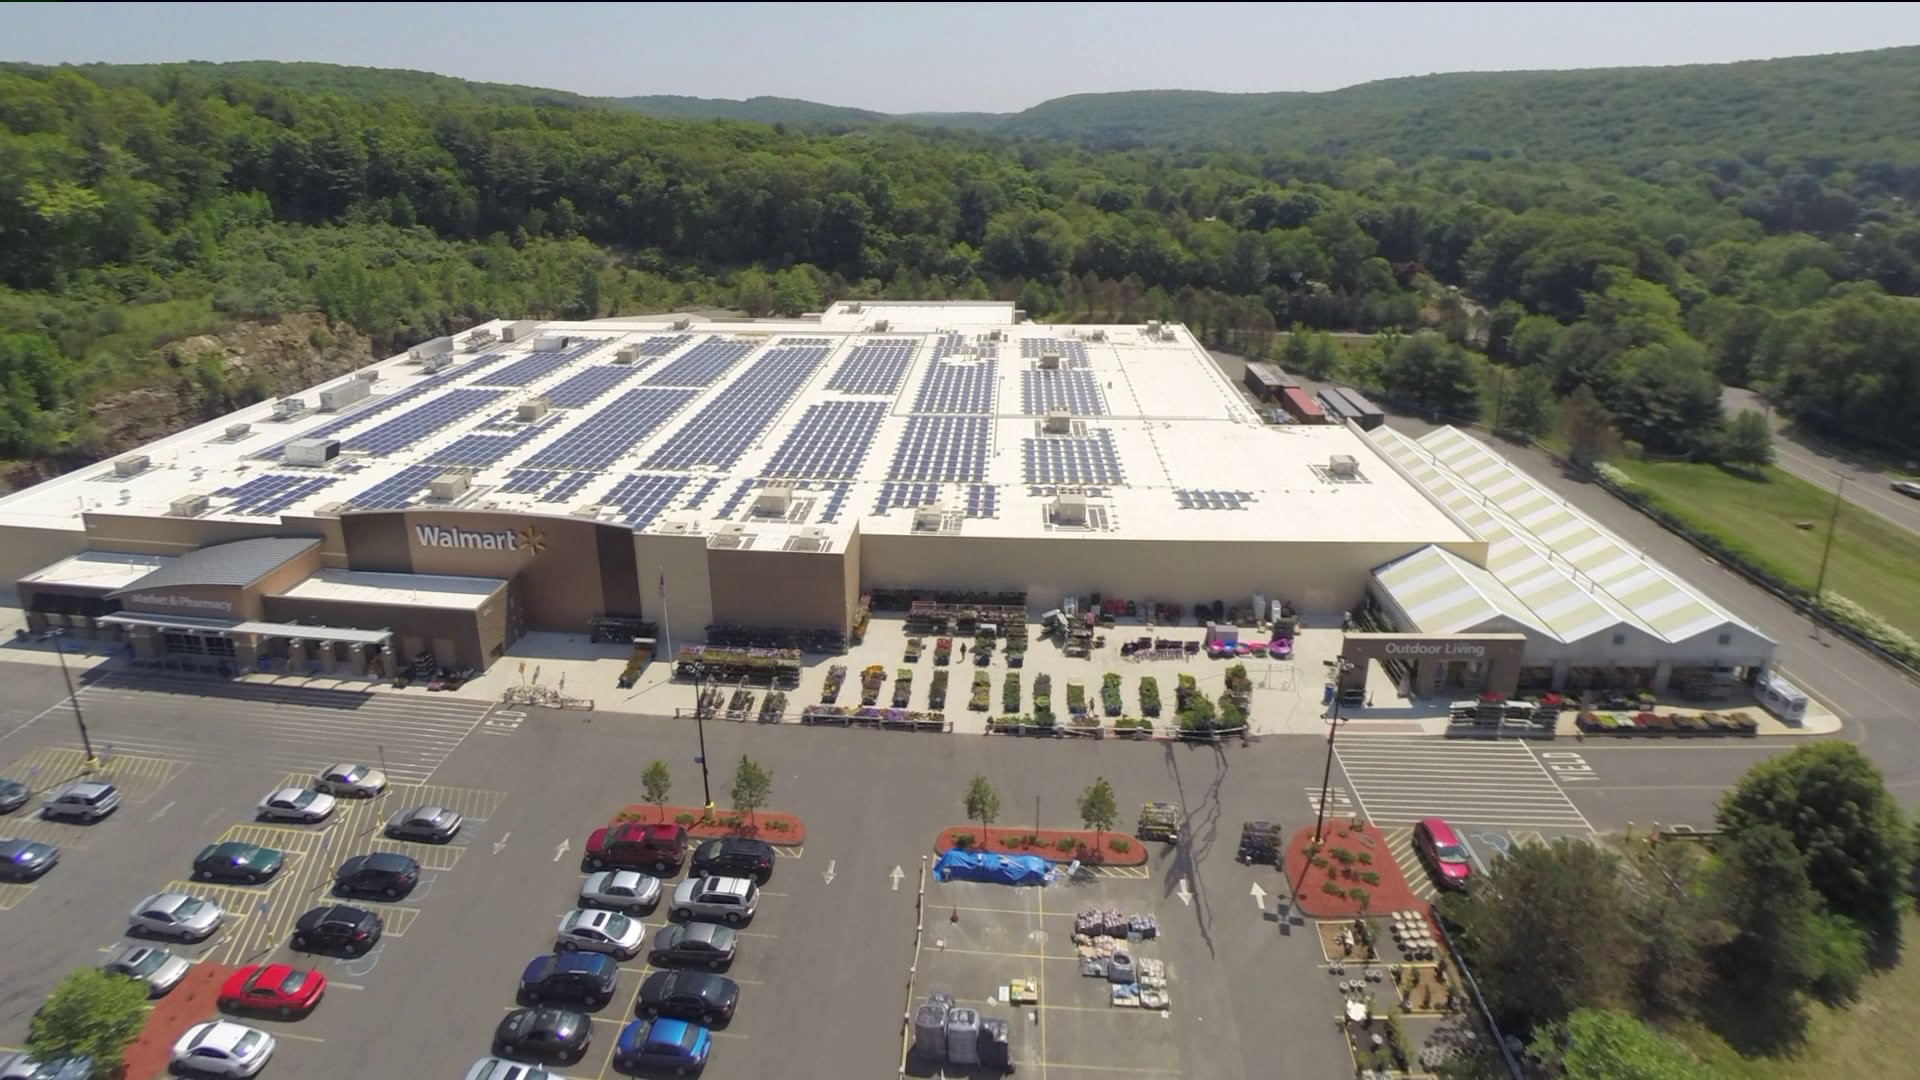 WorkinCT: Creenskies bringing solar energy to schools in CT